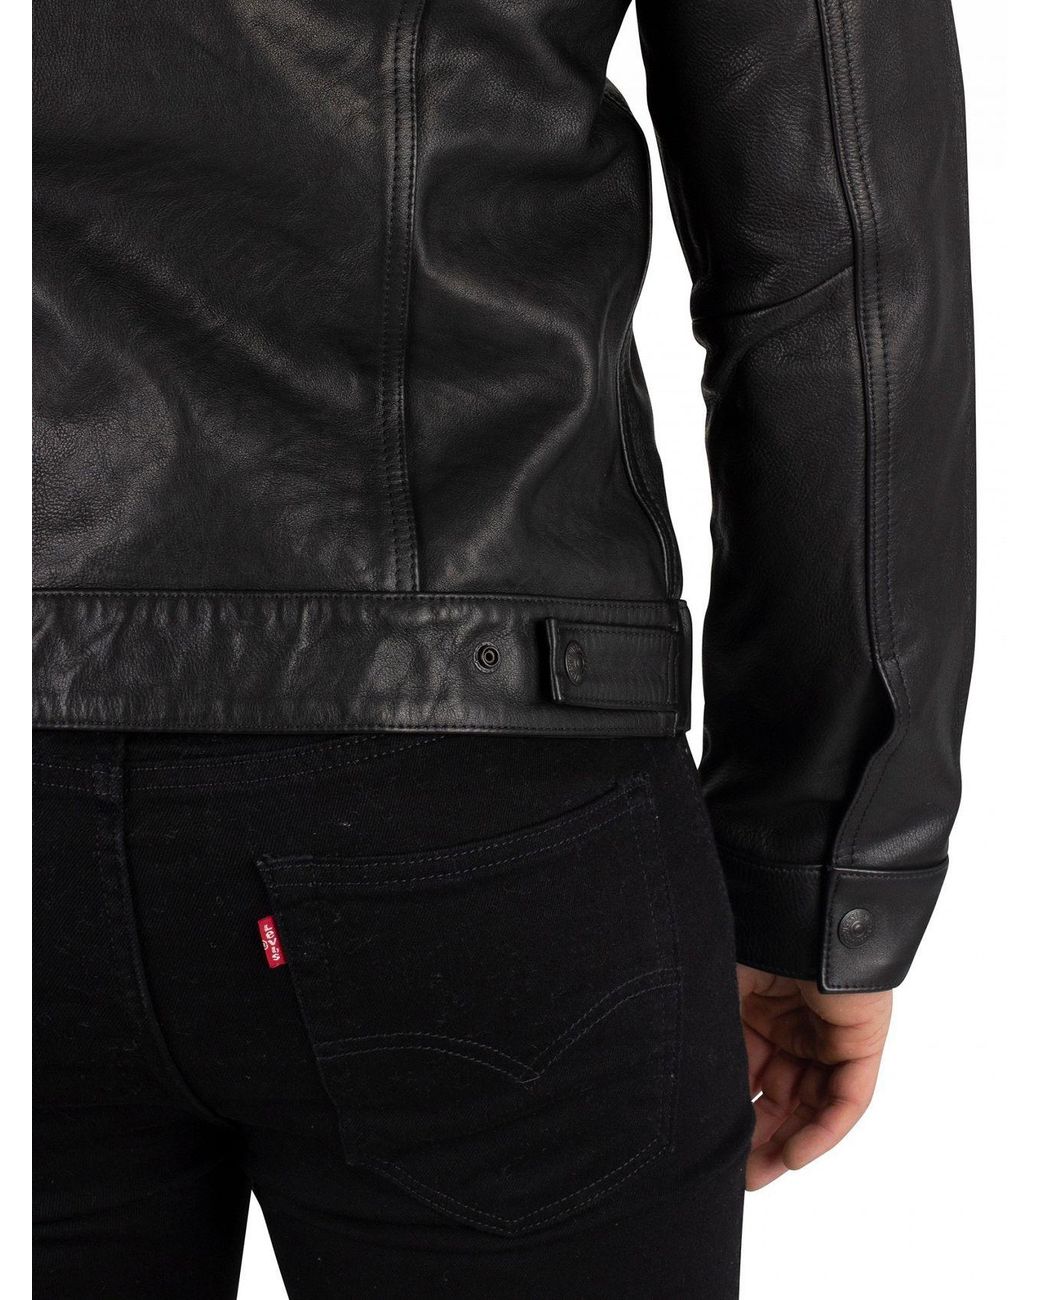 Levi's Type 3 Black Leather Trucker Jacket for Men | Lyst